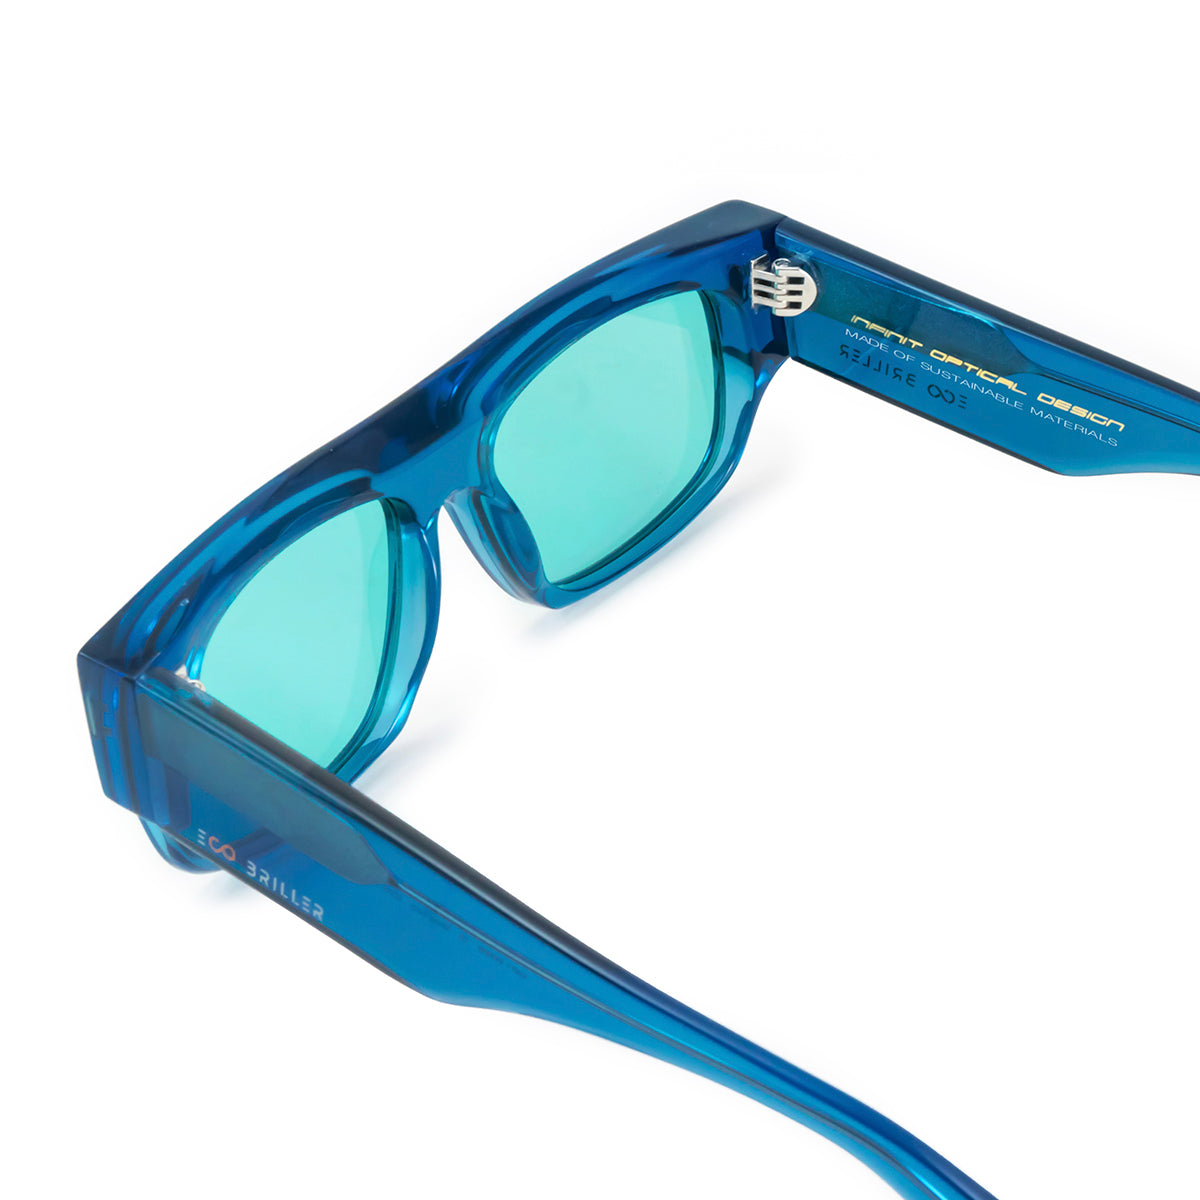 Glasgow Eco Briller - Translucent Blue - Turquoise Lens